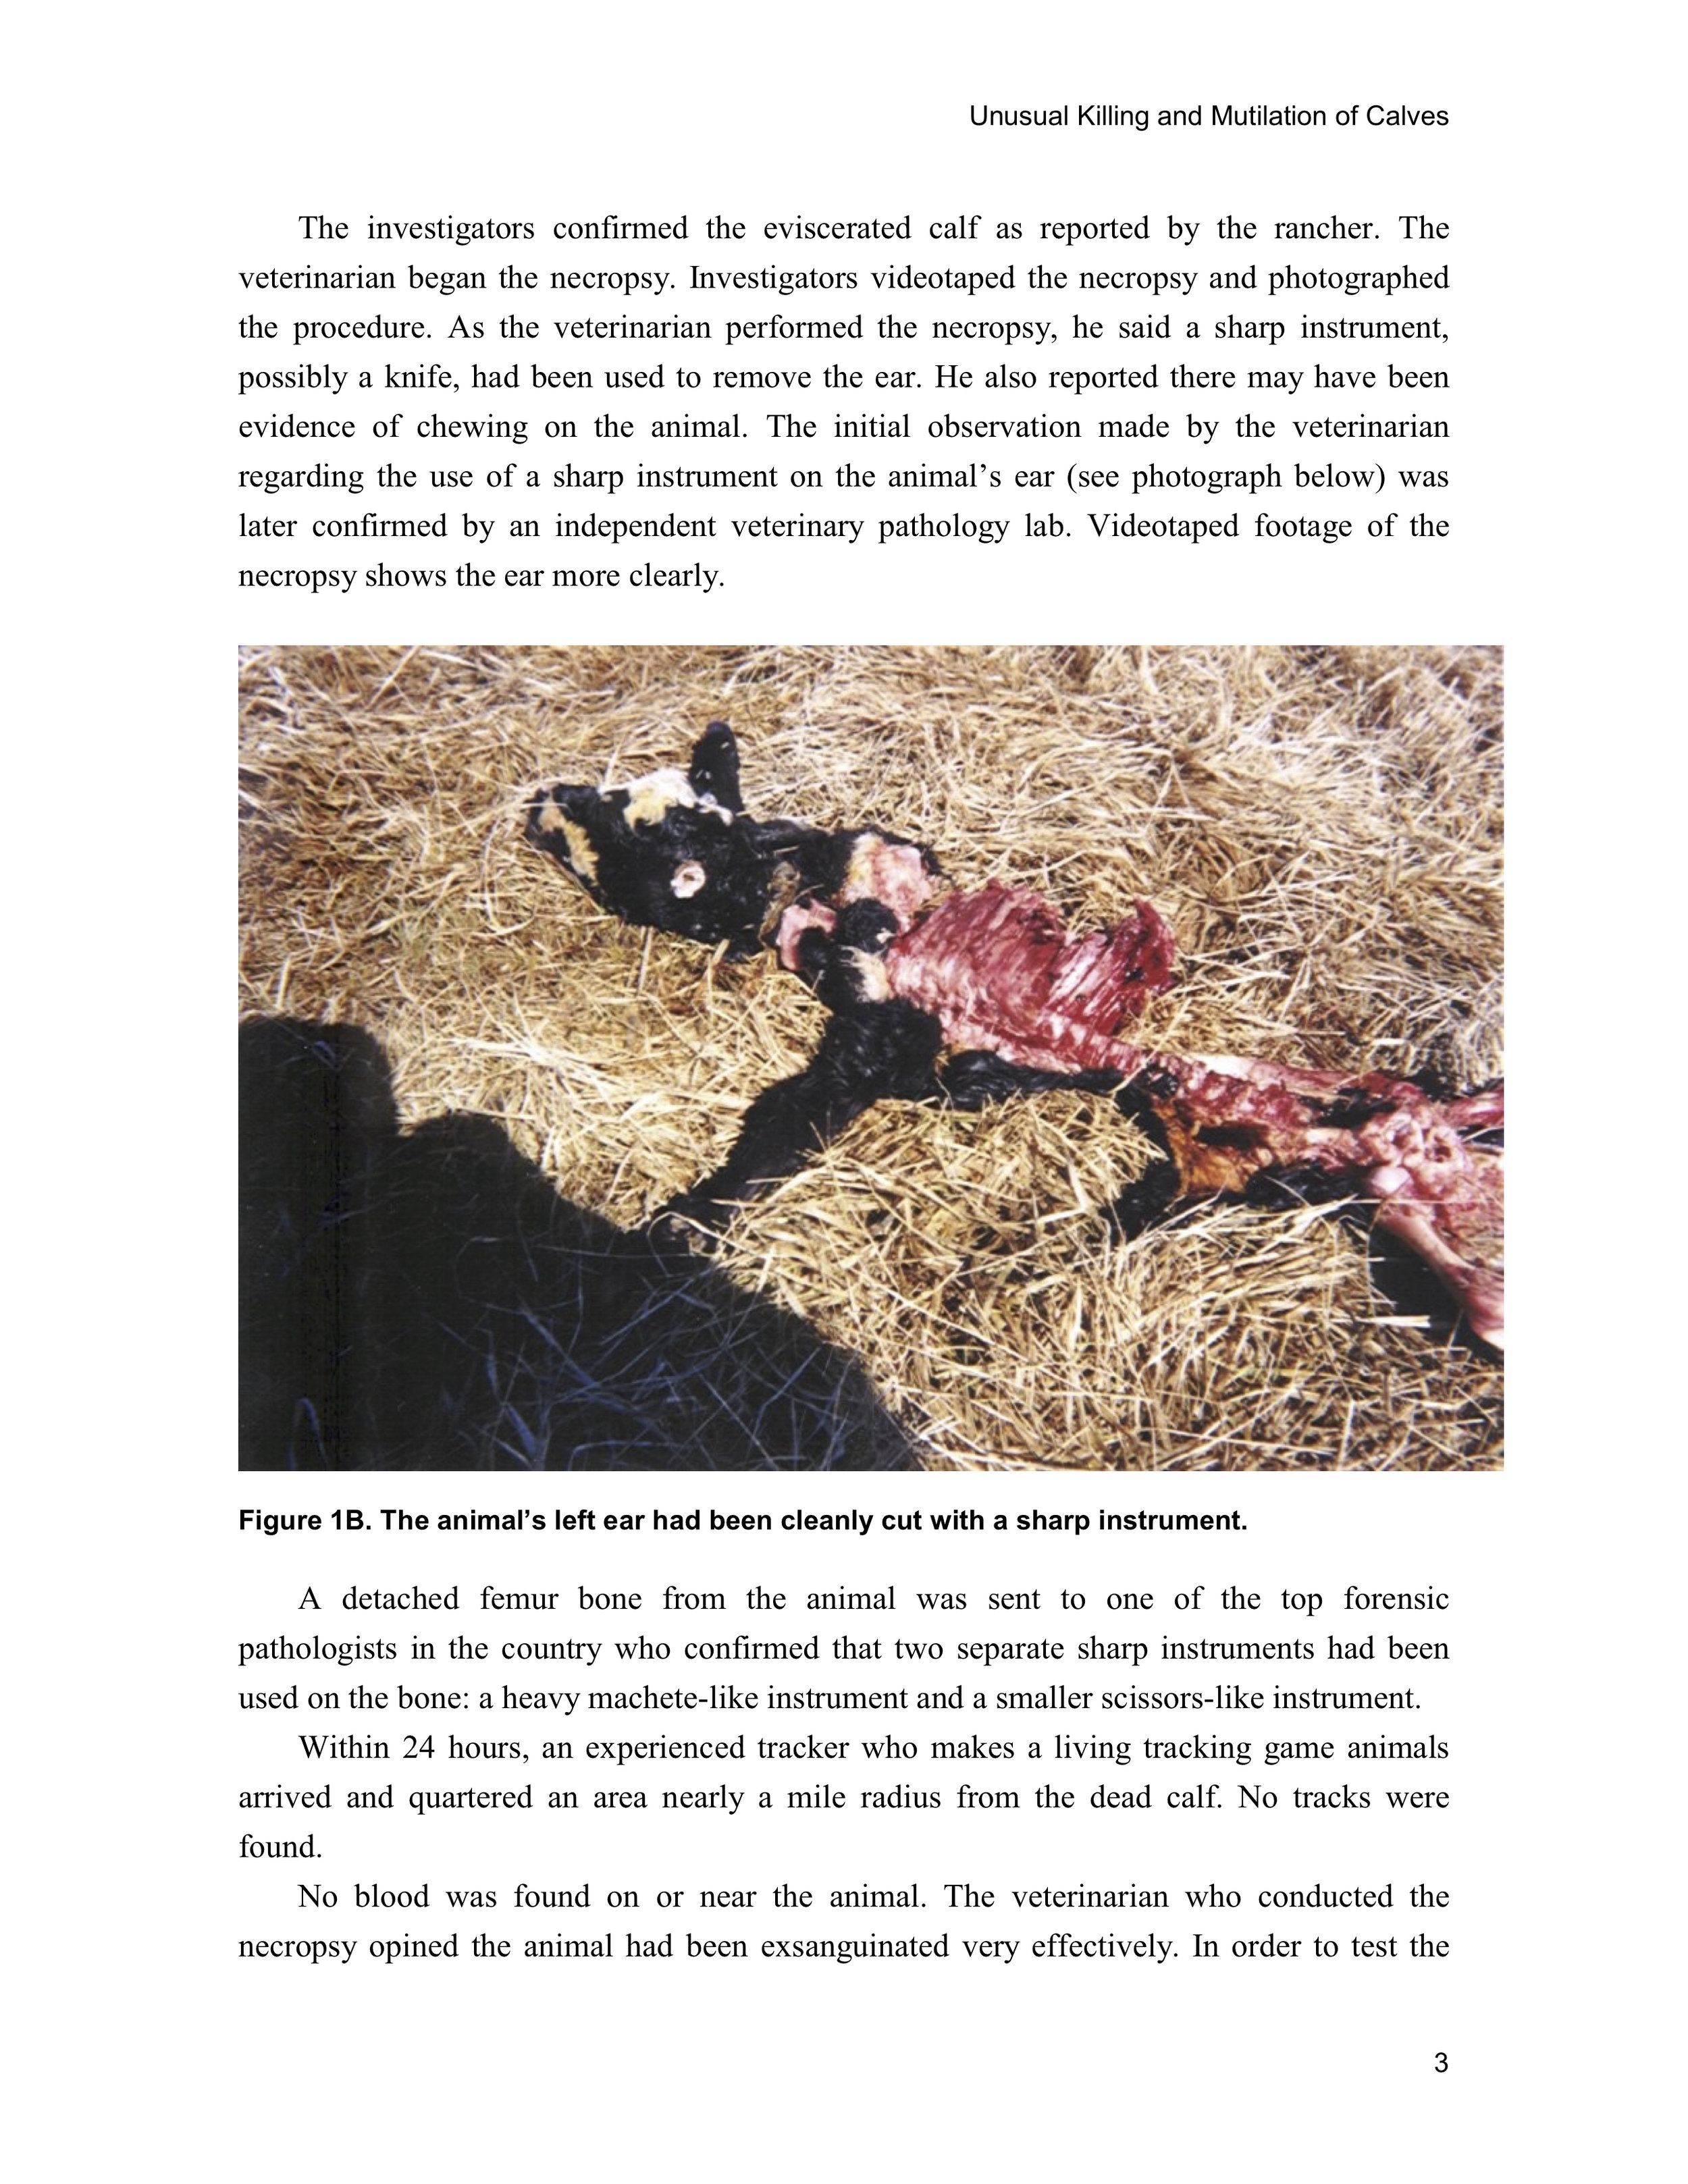 1997 ANIMAL MUTILATION REPORT 2.jpg